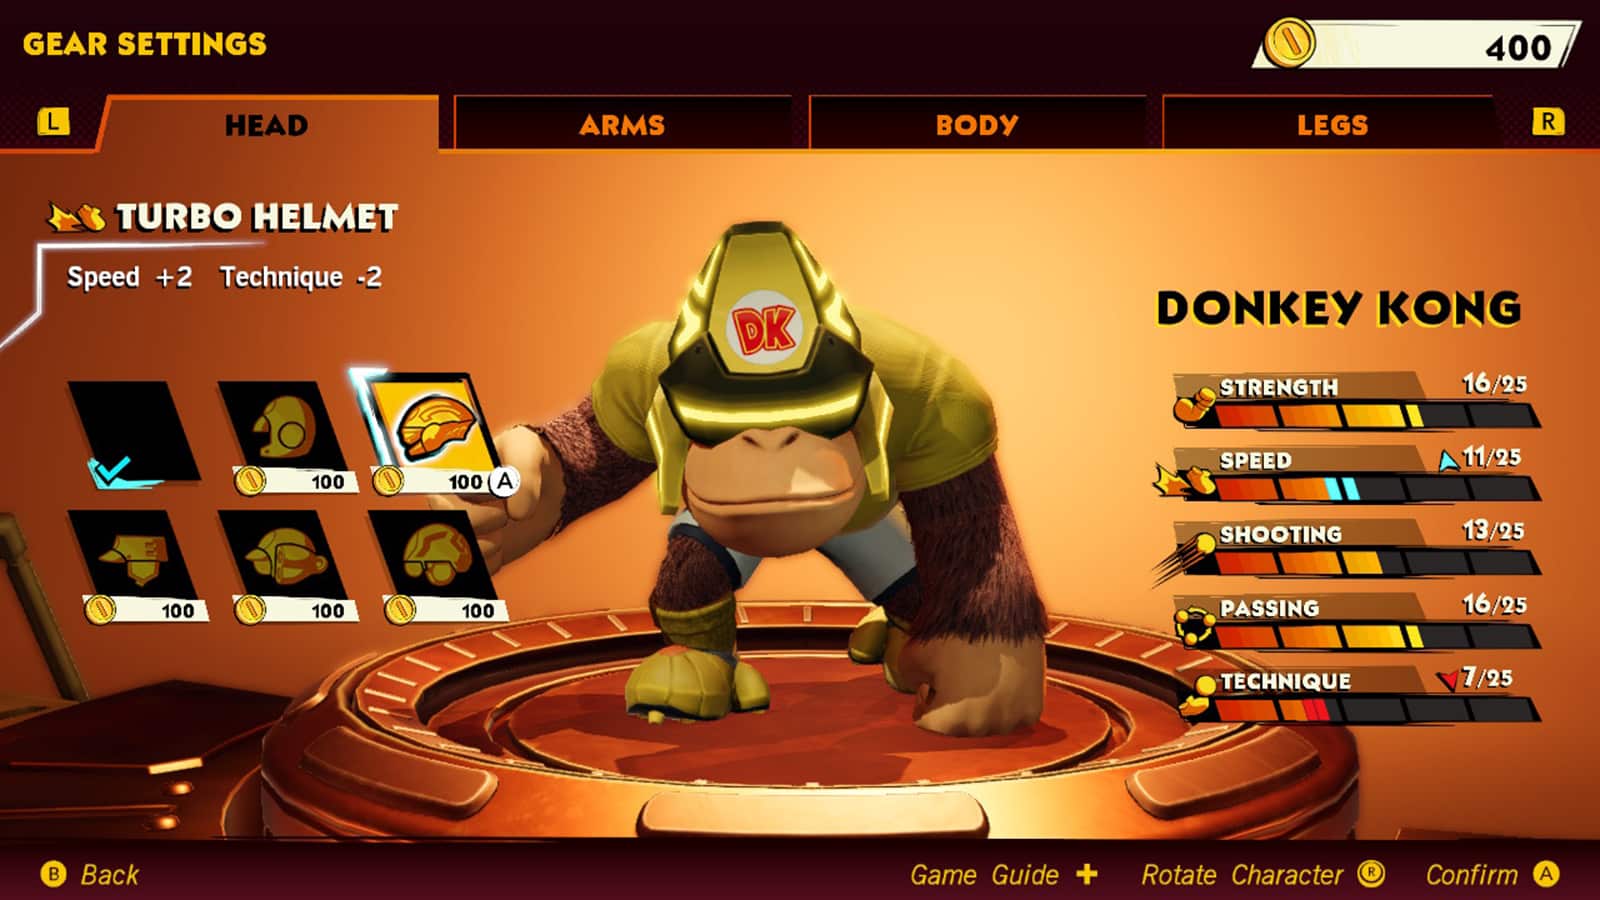 A screenshot of the gear menu in Mario Strikers Battle League